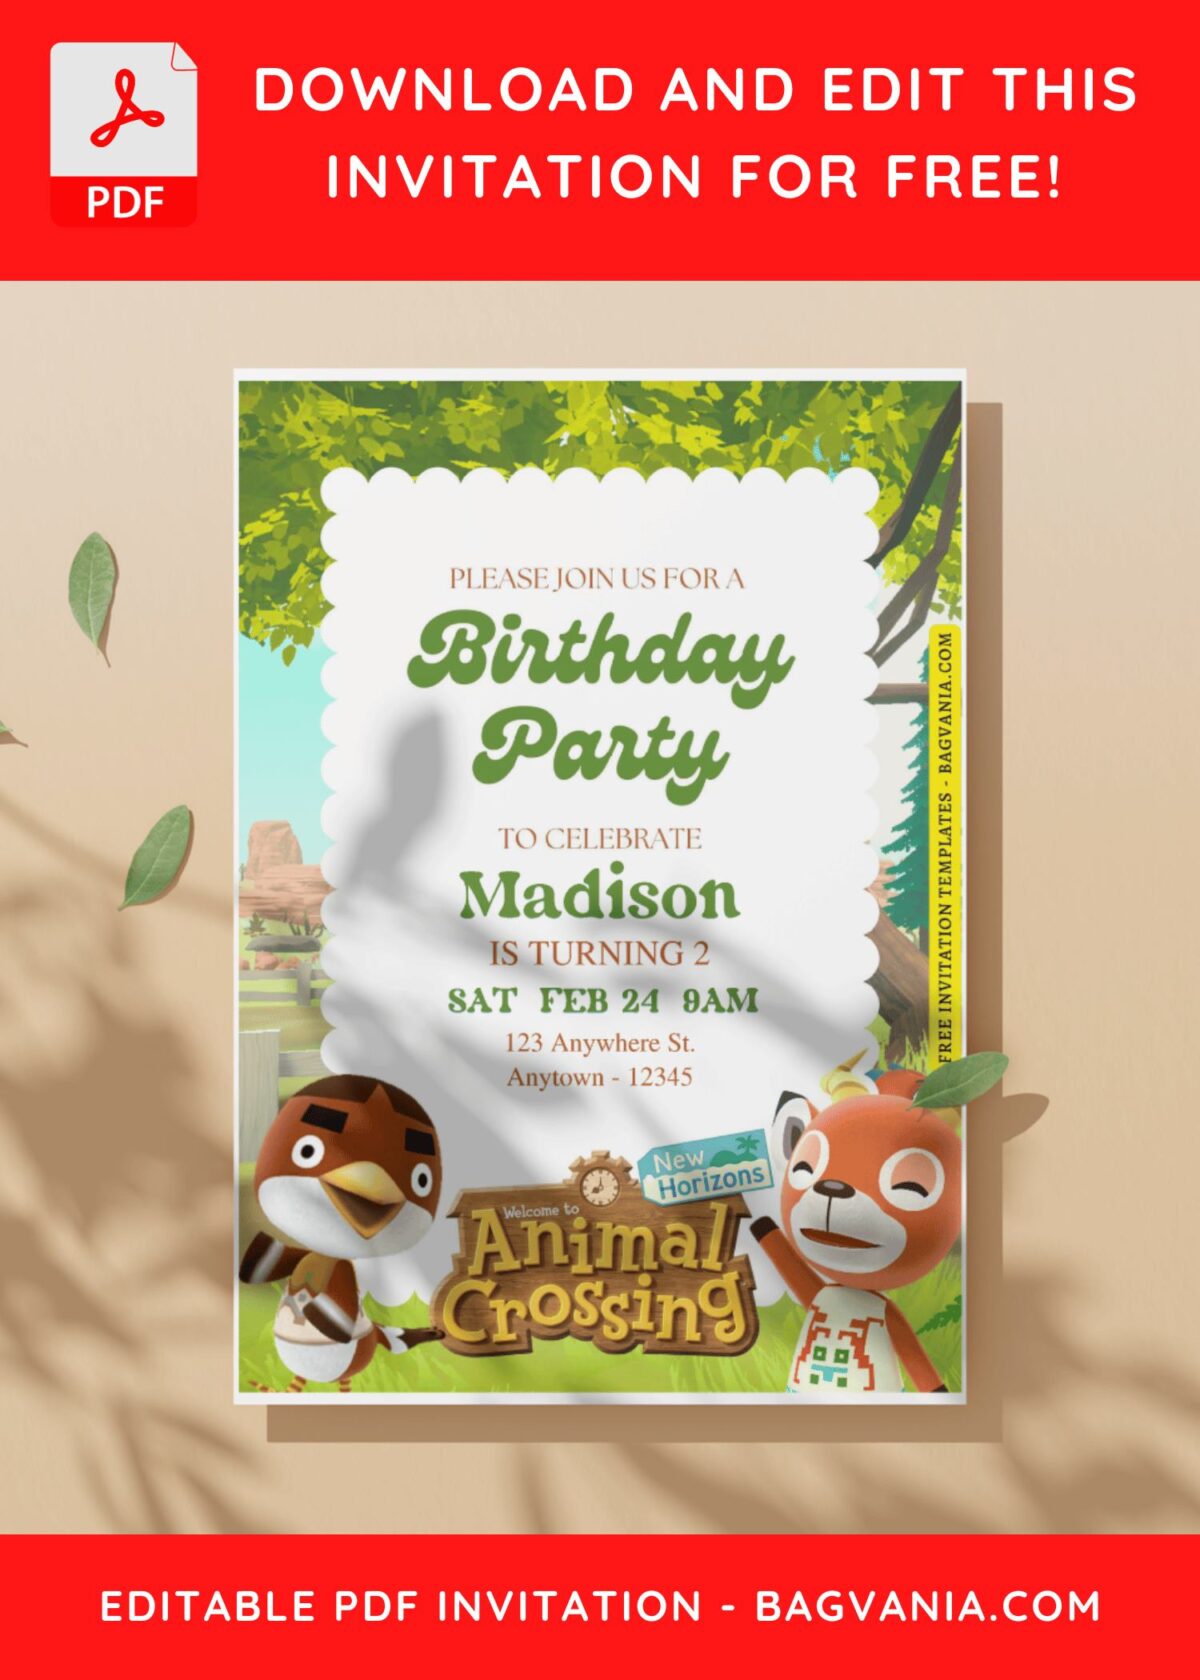 (Free Editable PDF) Whimsy Animal Crossing Birthday Invitation Templates C